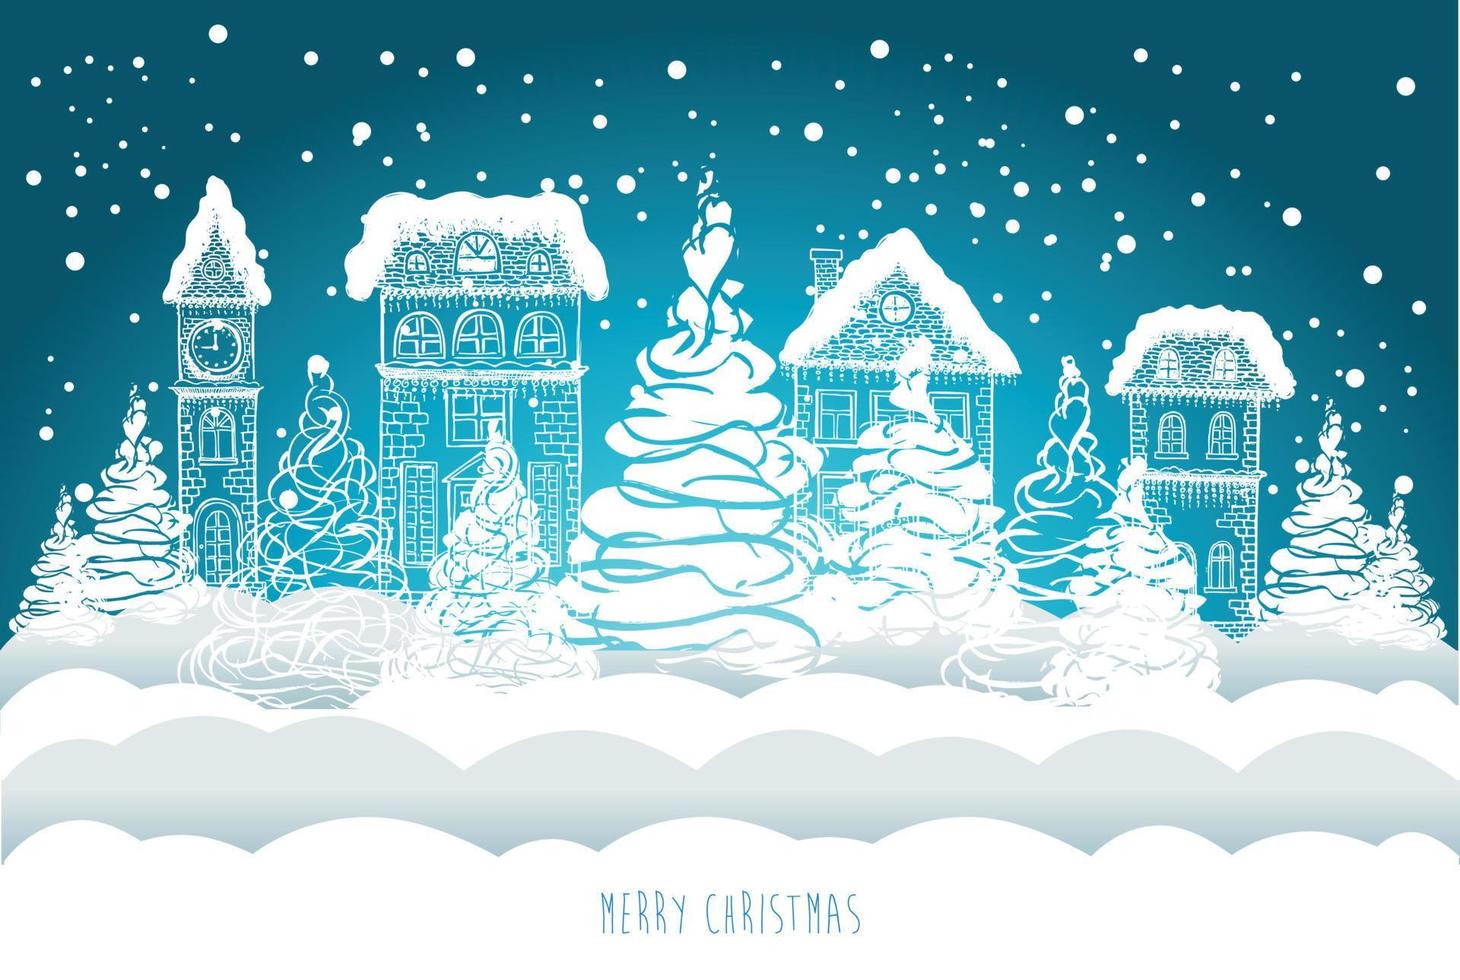 Illustration of houses. Christmas Greeting card. Hand drawn illustration. vector